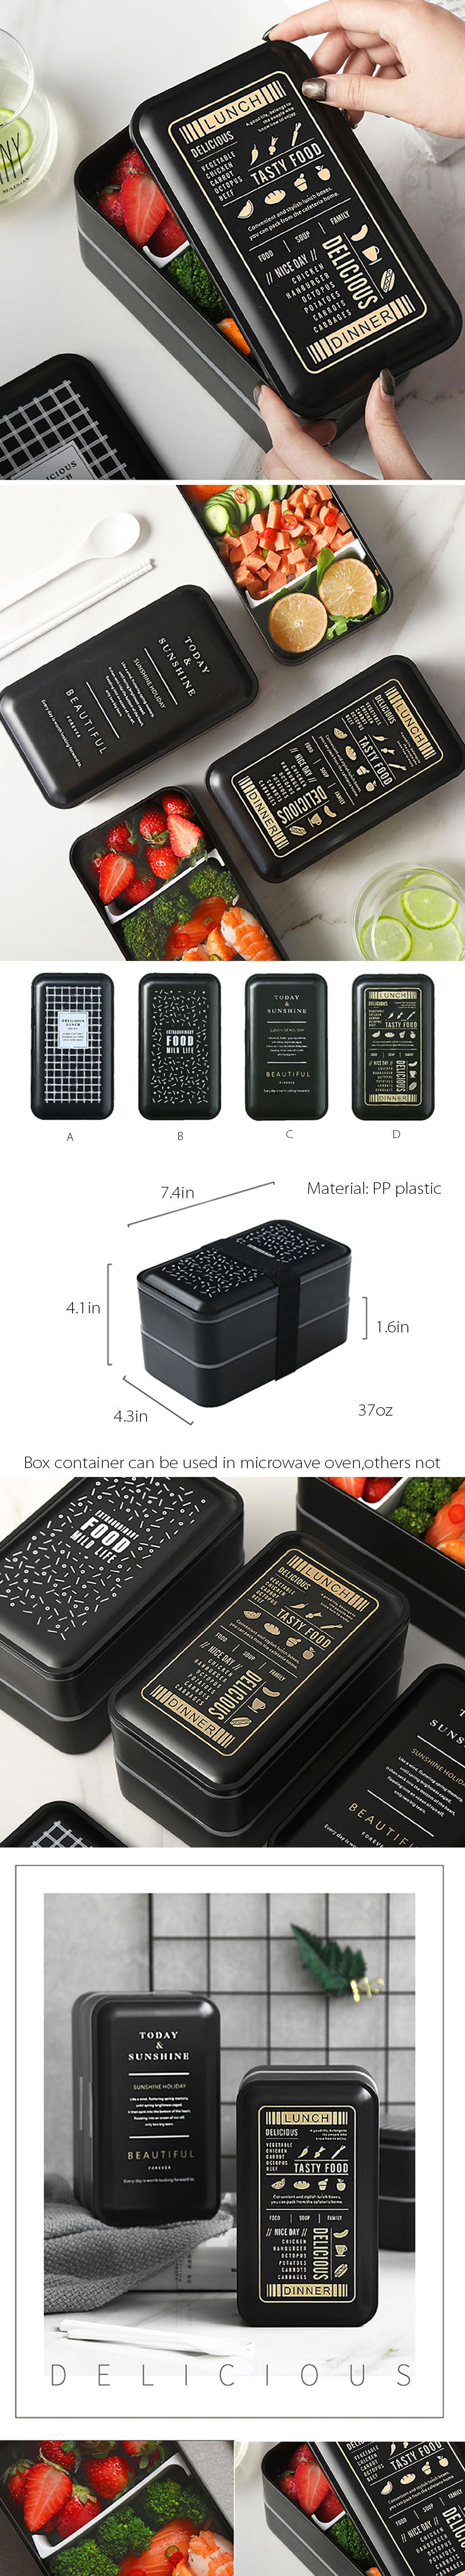 Black Bento Box - ApolloBox